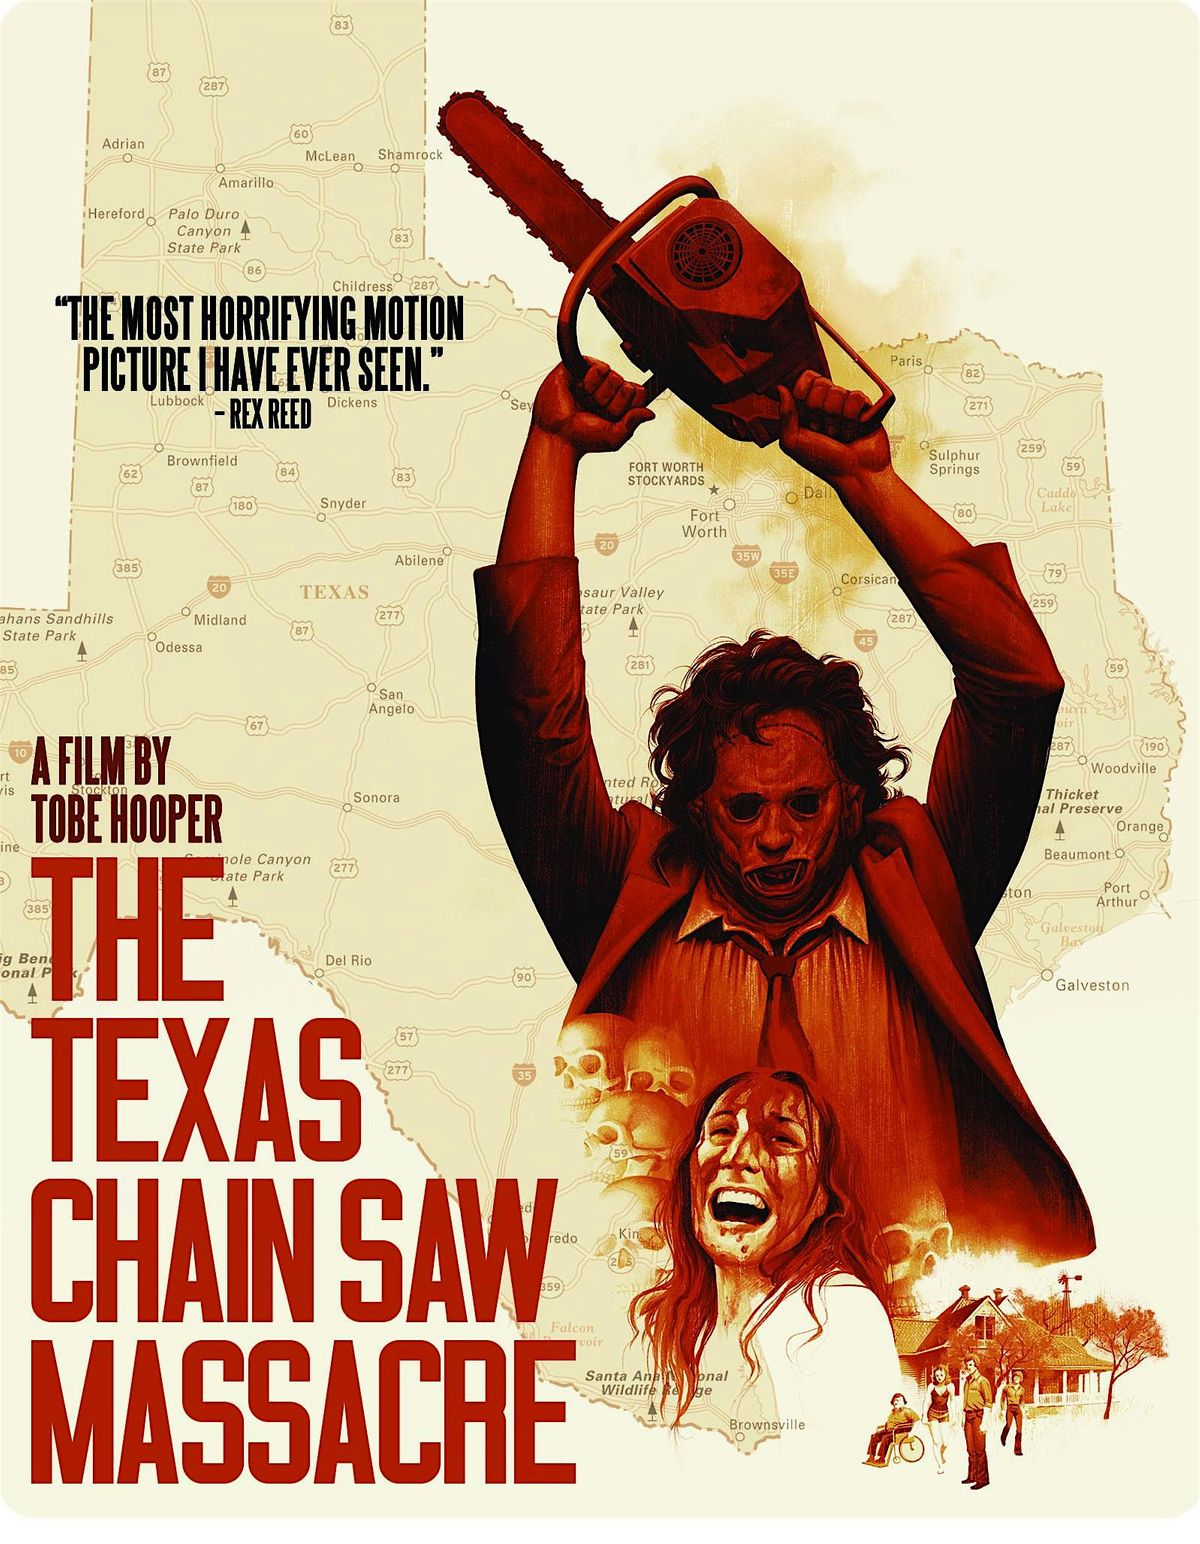 Cult Classic Film Series - Texas Chainsaw Massacre (1974)  -FREE Screening